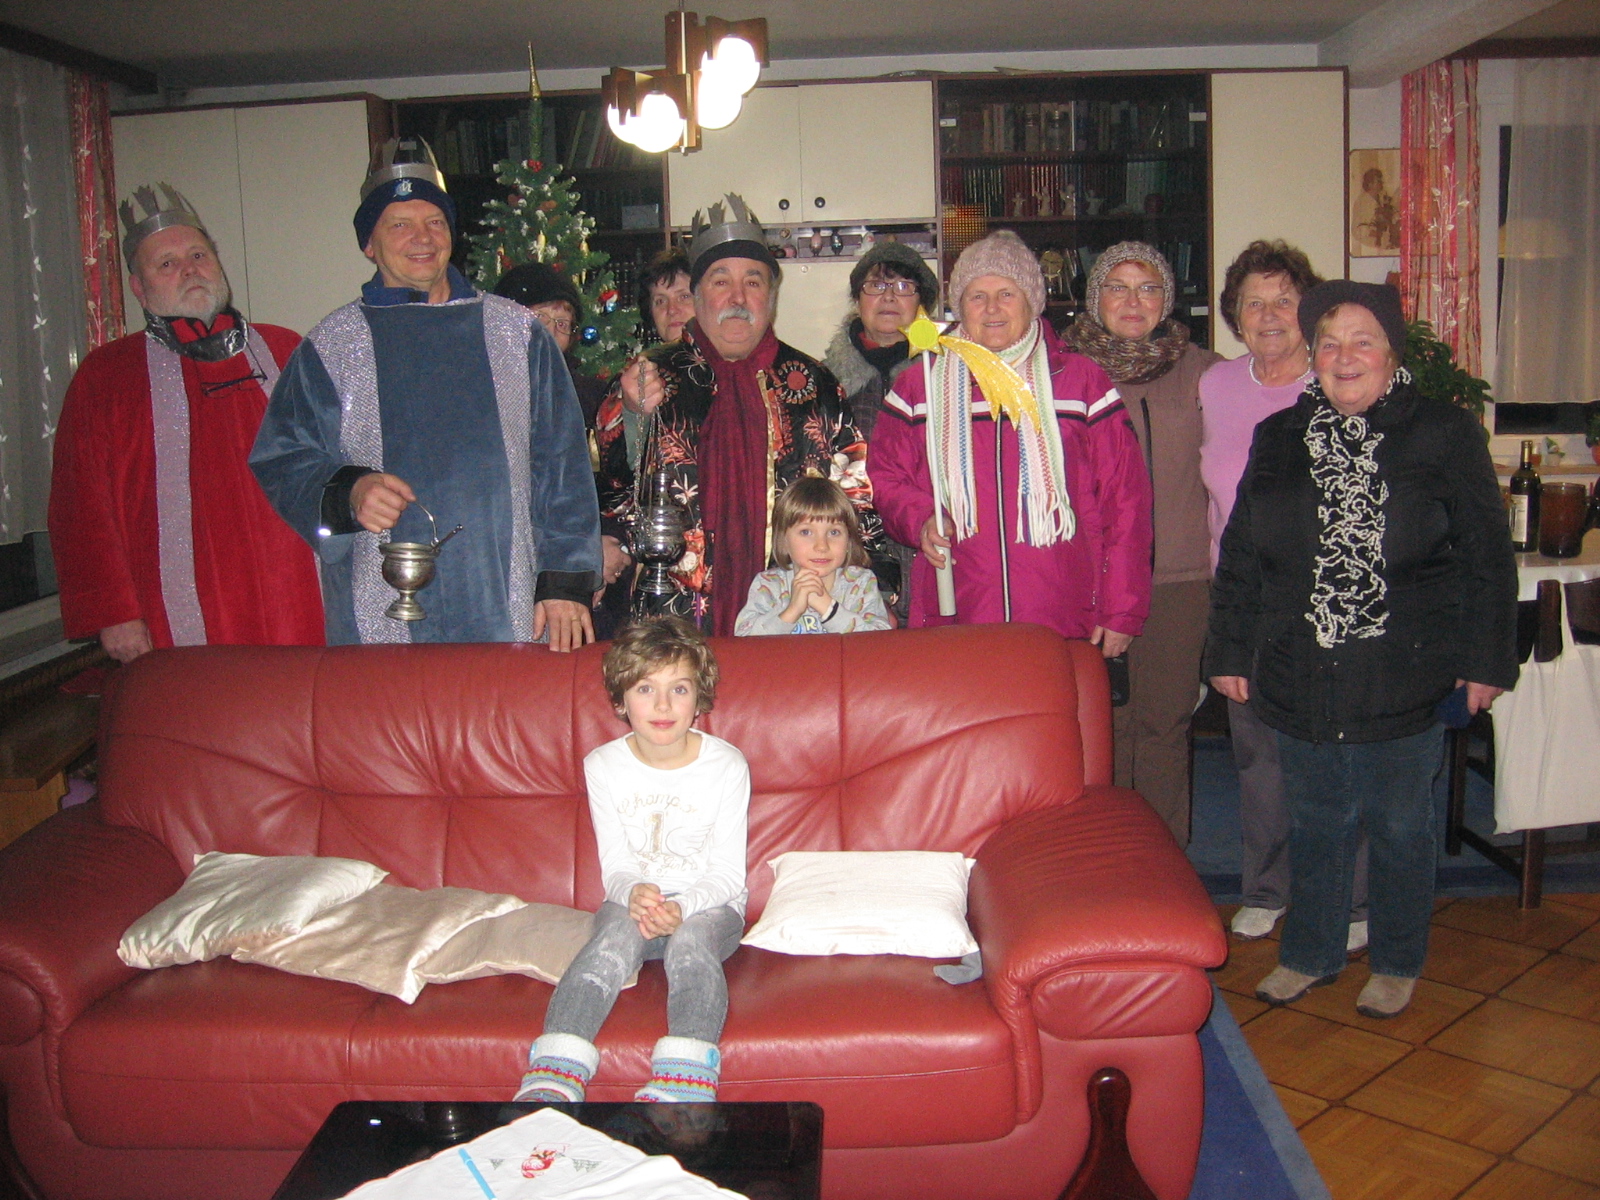 TRIJE KRALJI s pevskim zborom župnije Dravograd obiskali družine v fari